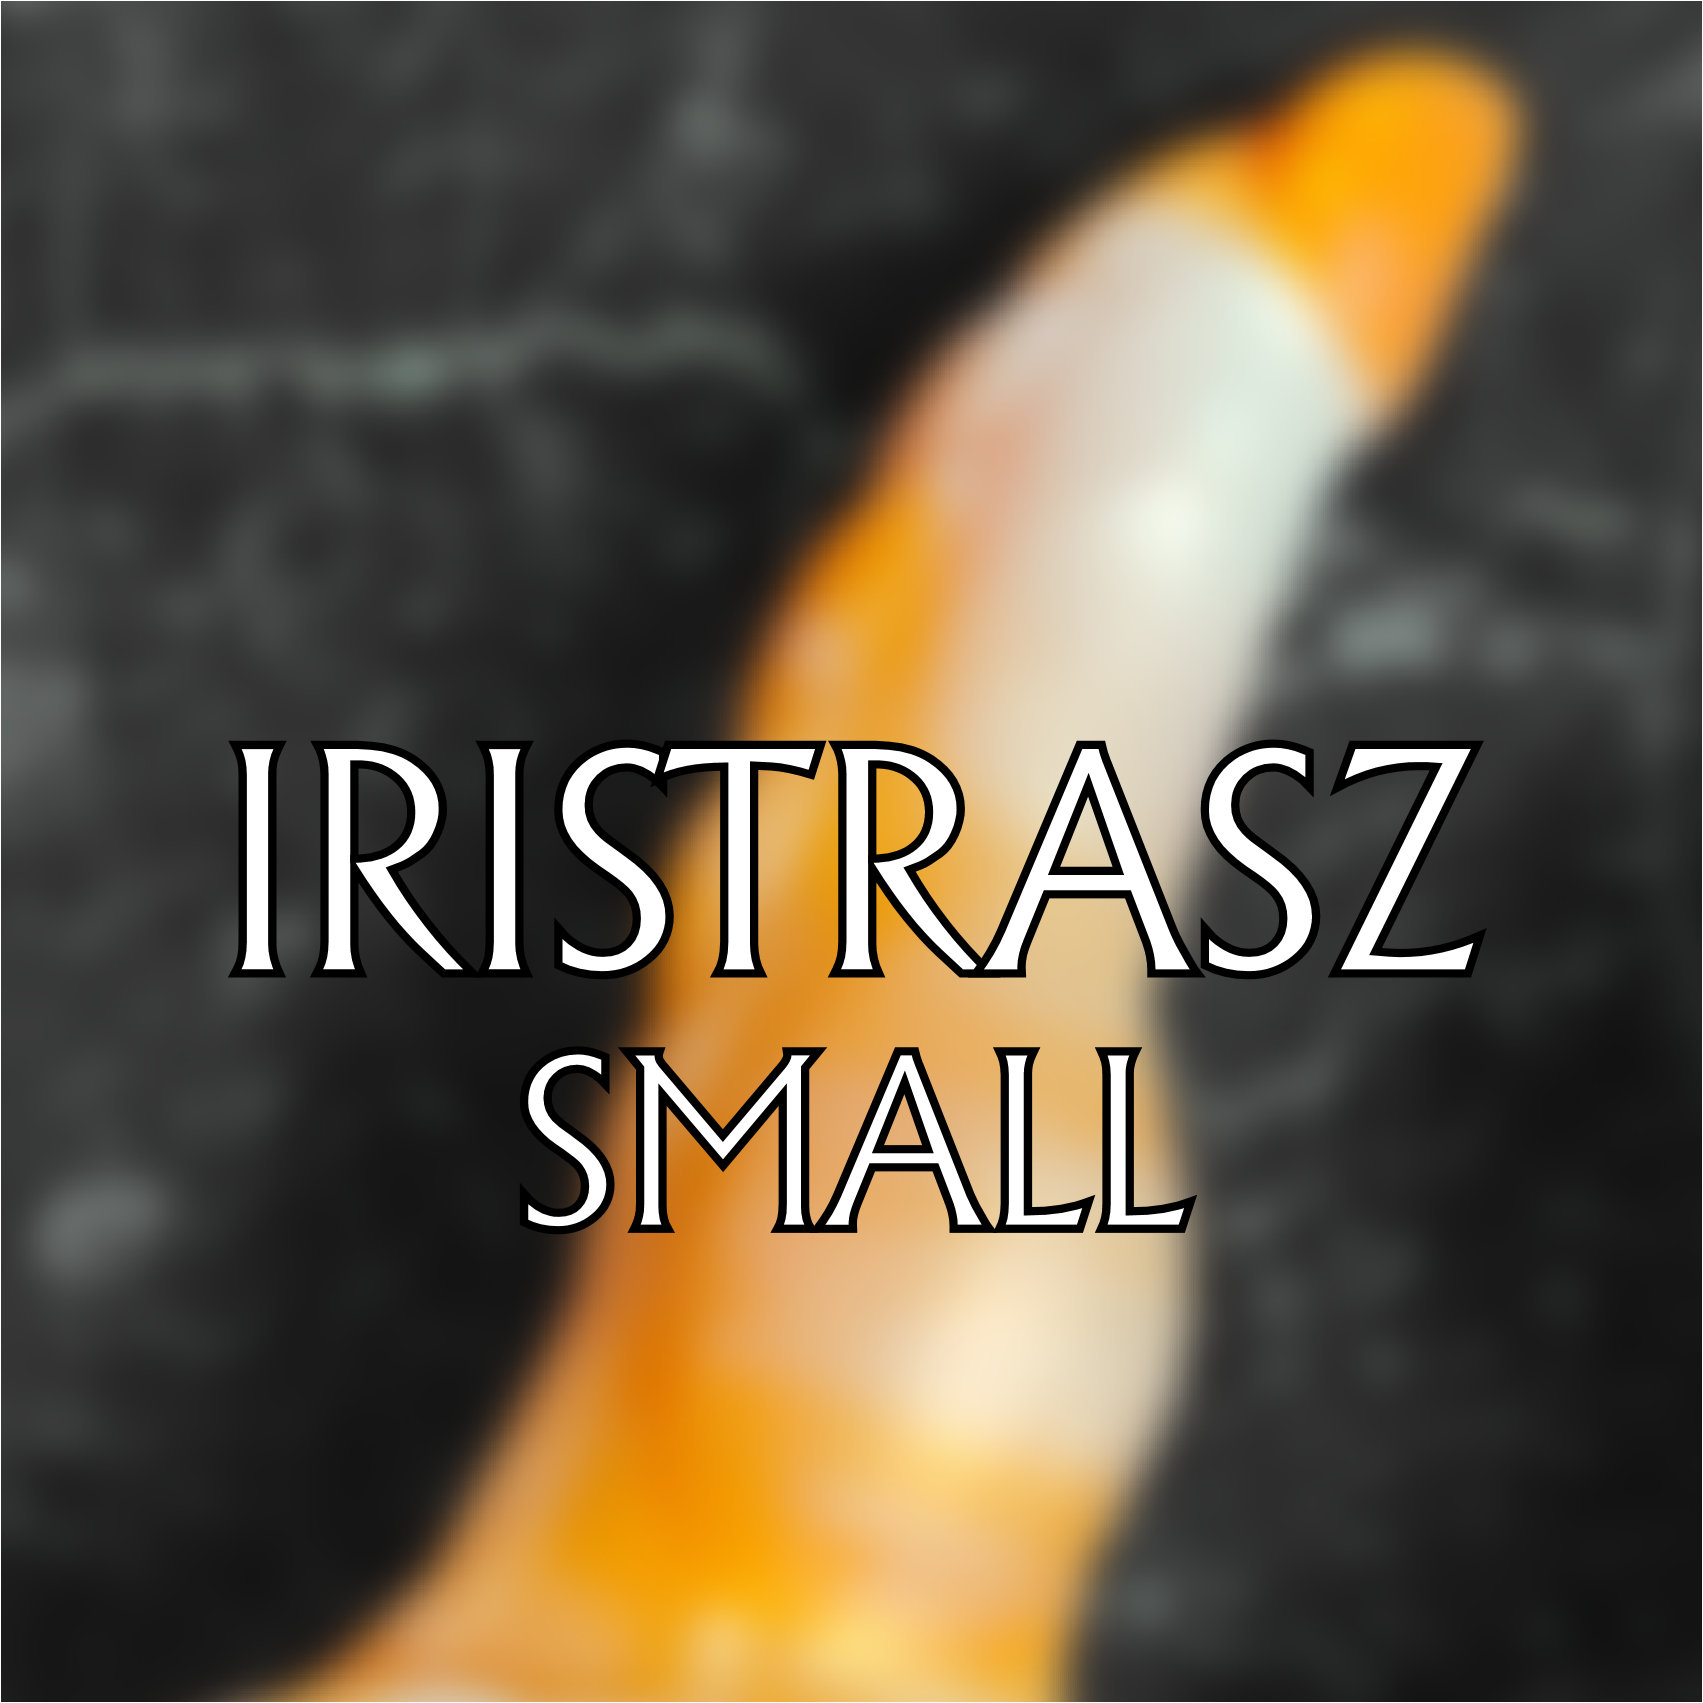 Iristrasz (Small) photo